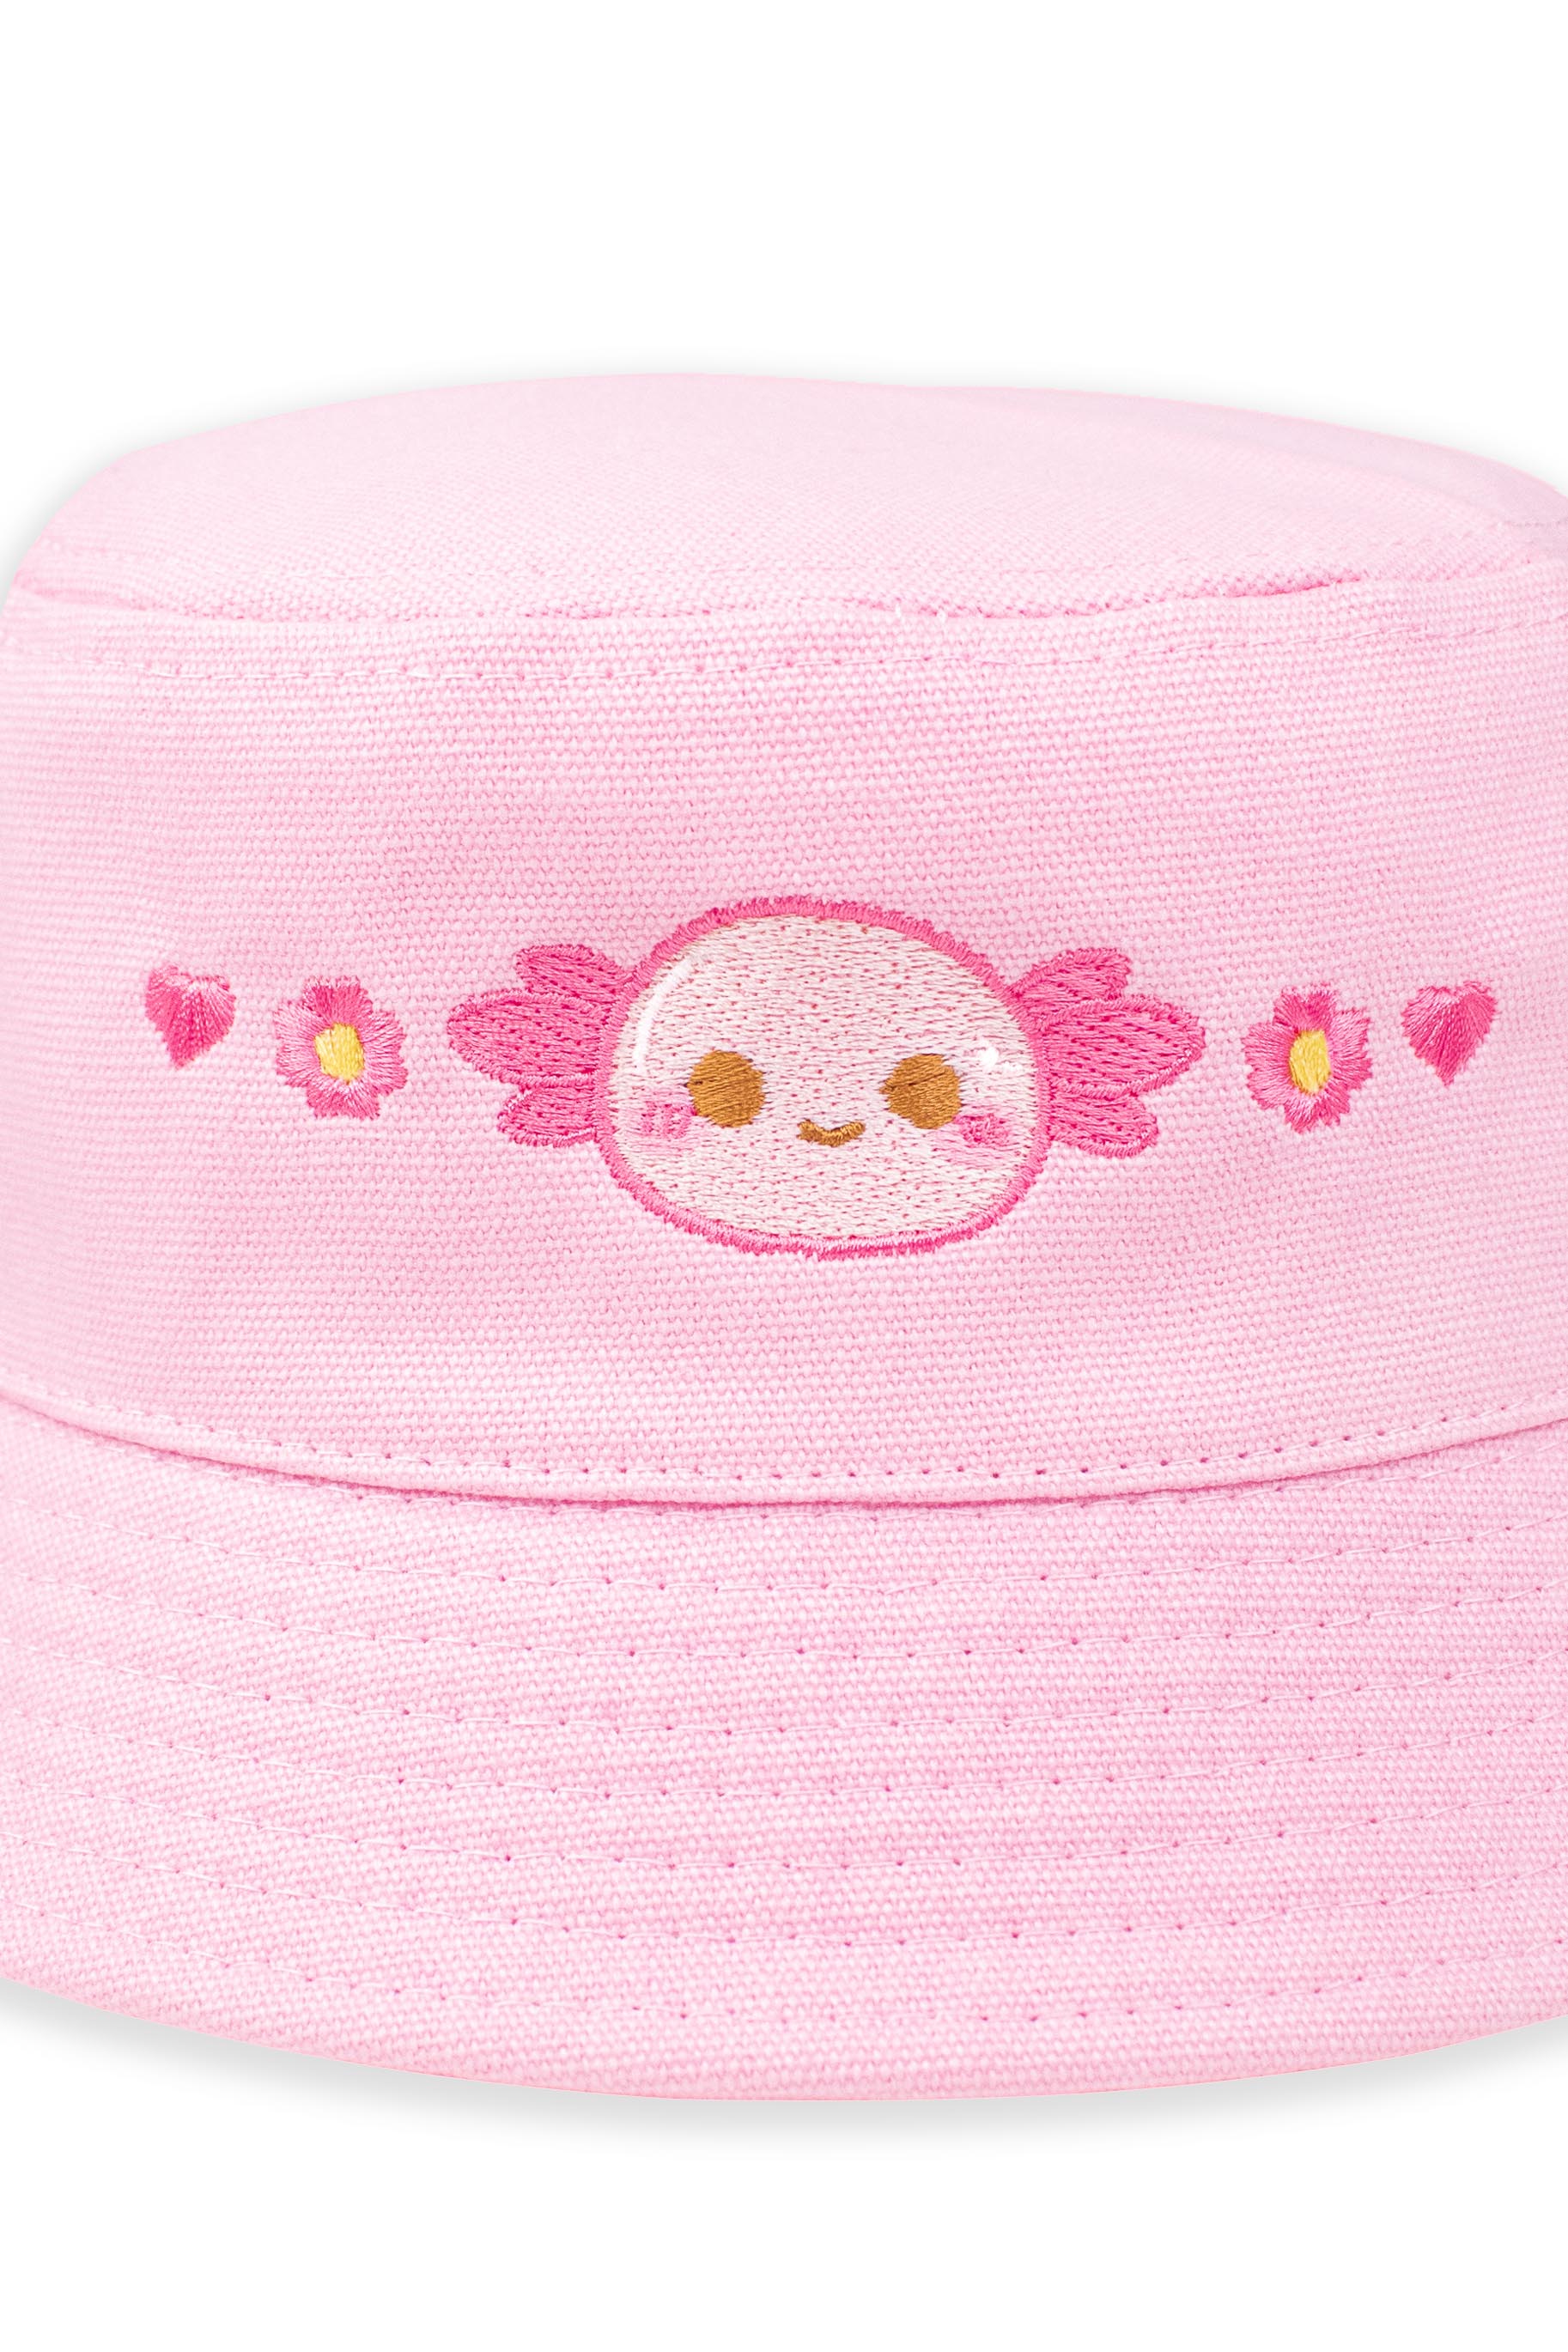 Xoxi The Axolotl Embroidered Bucket Hat - Momokakkoii